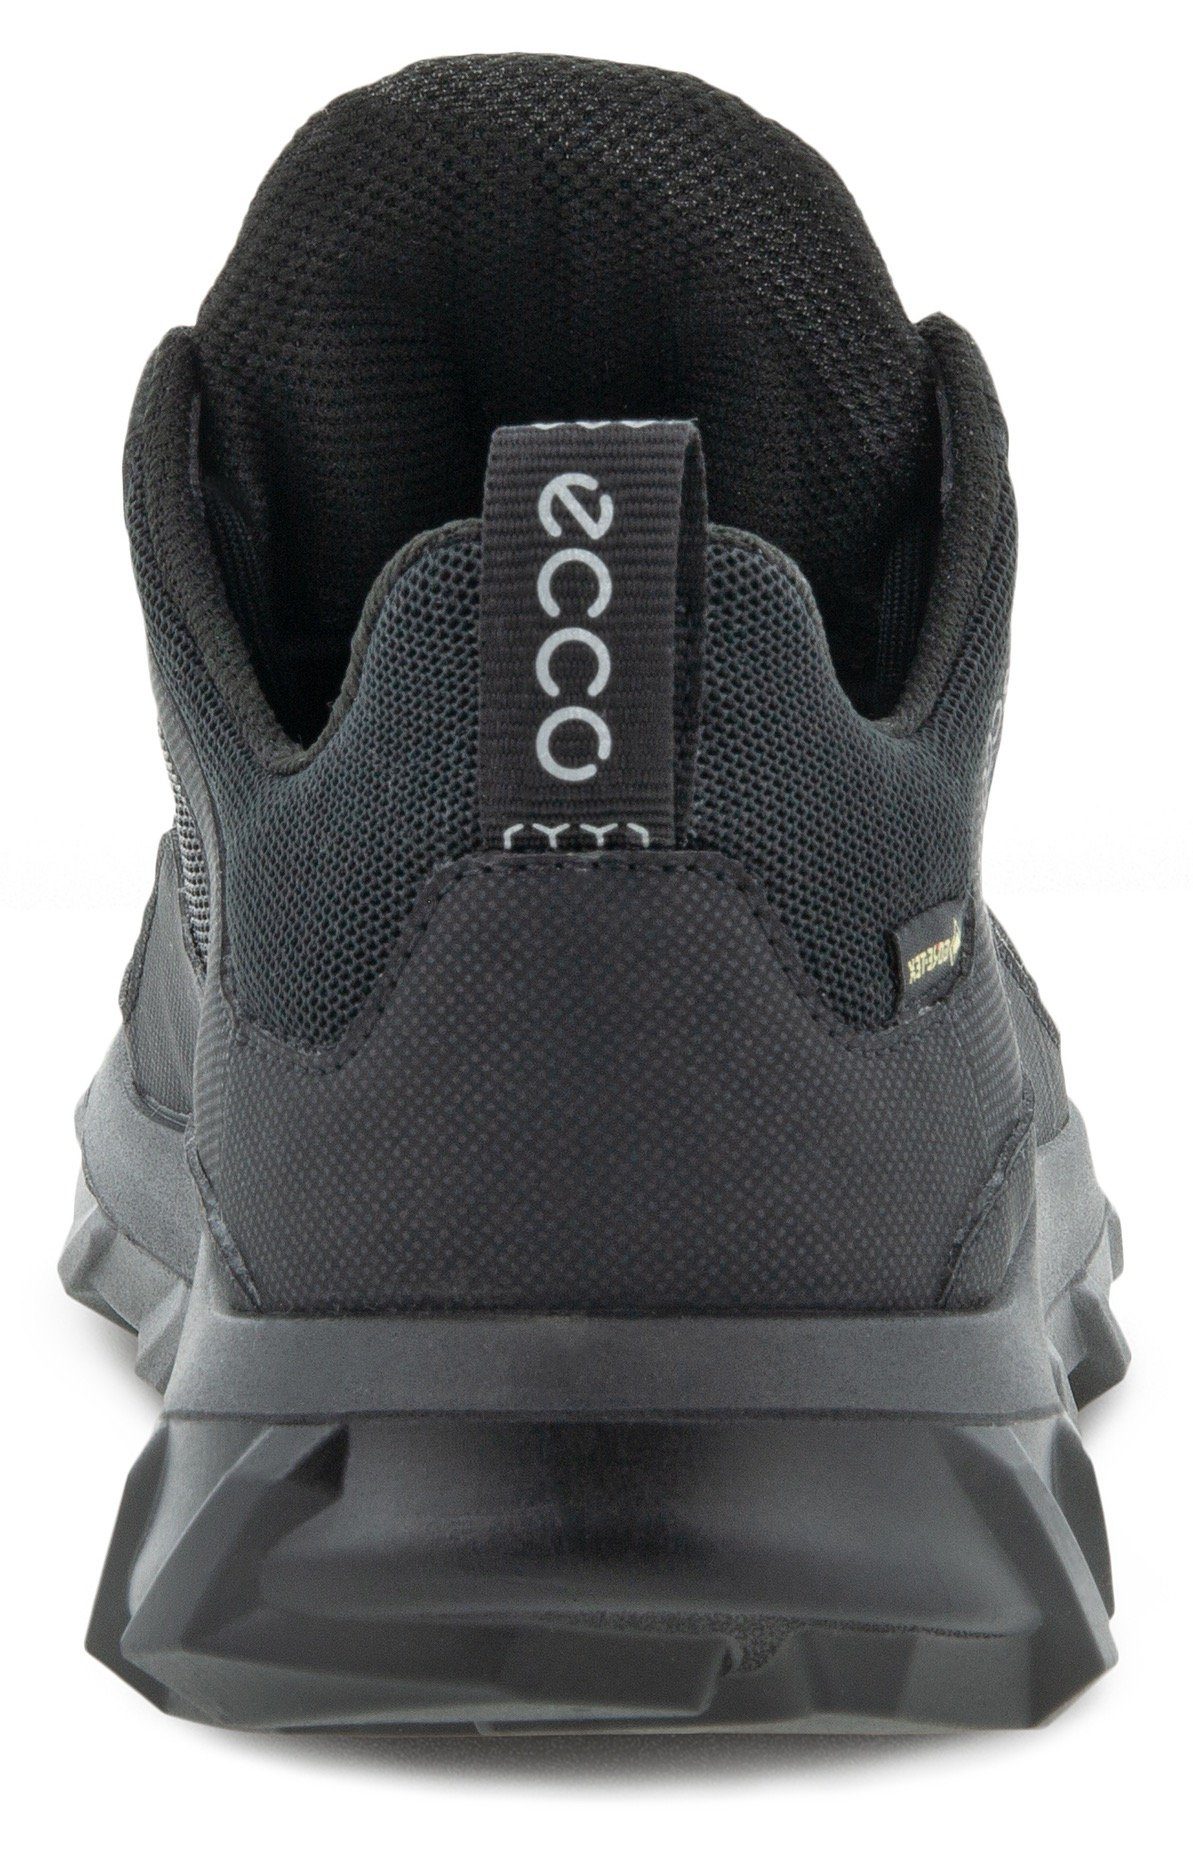 Ecco MX W Membran schwarz GORE-TEX mit winddichter Sneaker